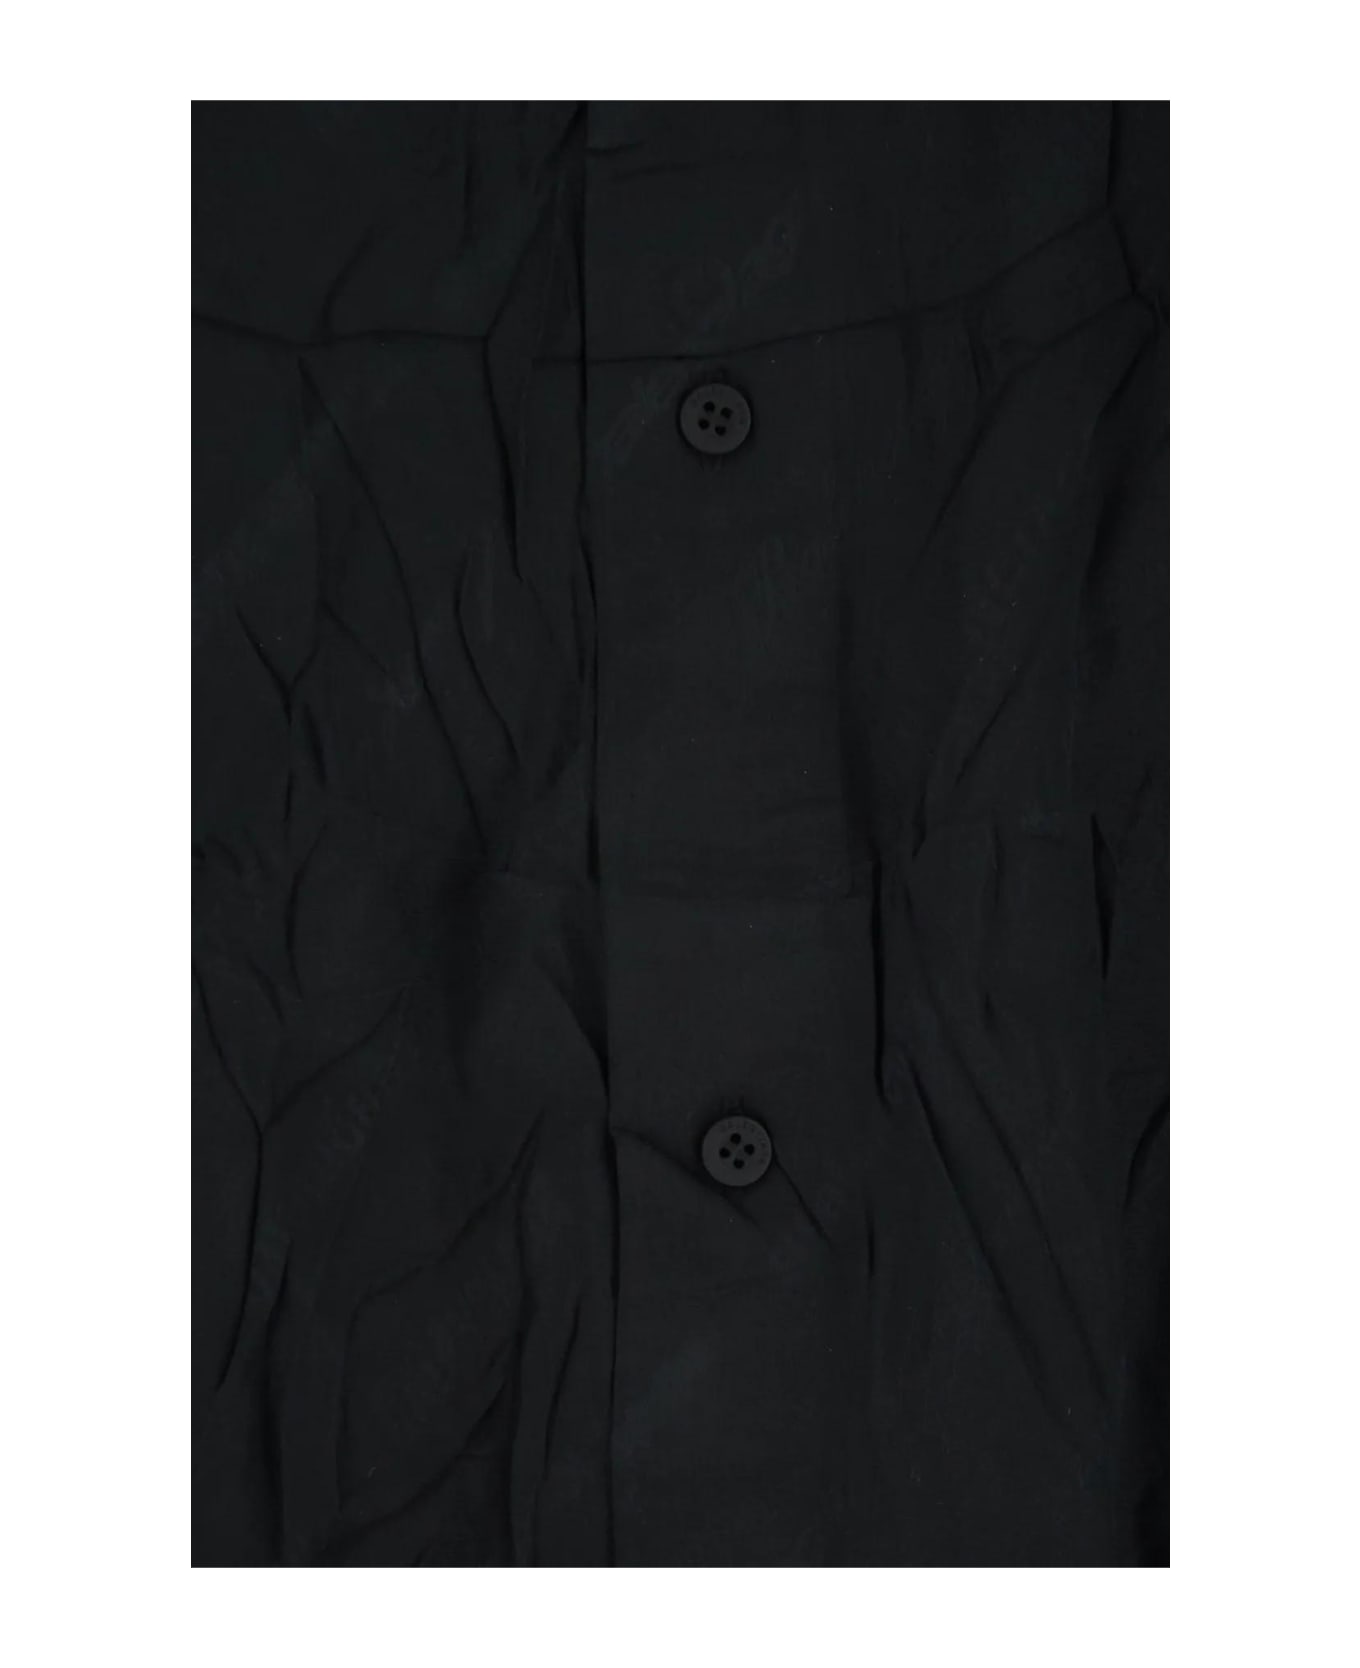 Balenciaga Black Silk Oversize Shirt - Black